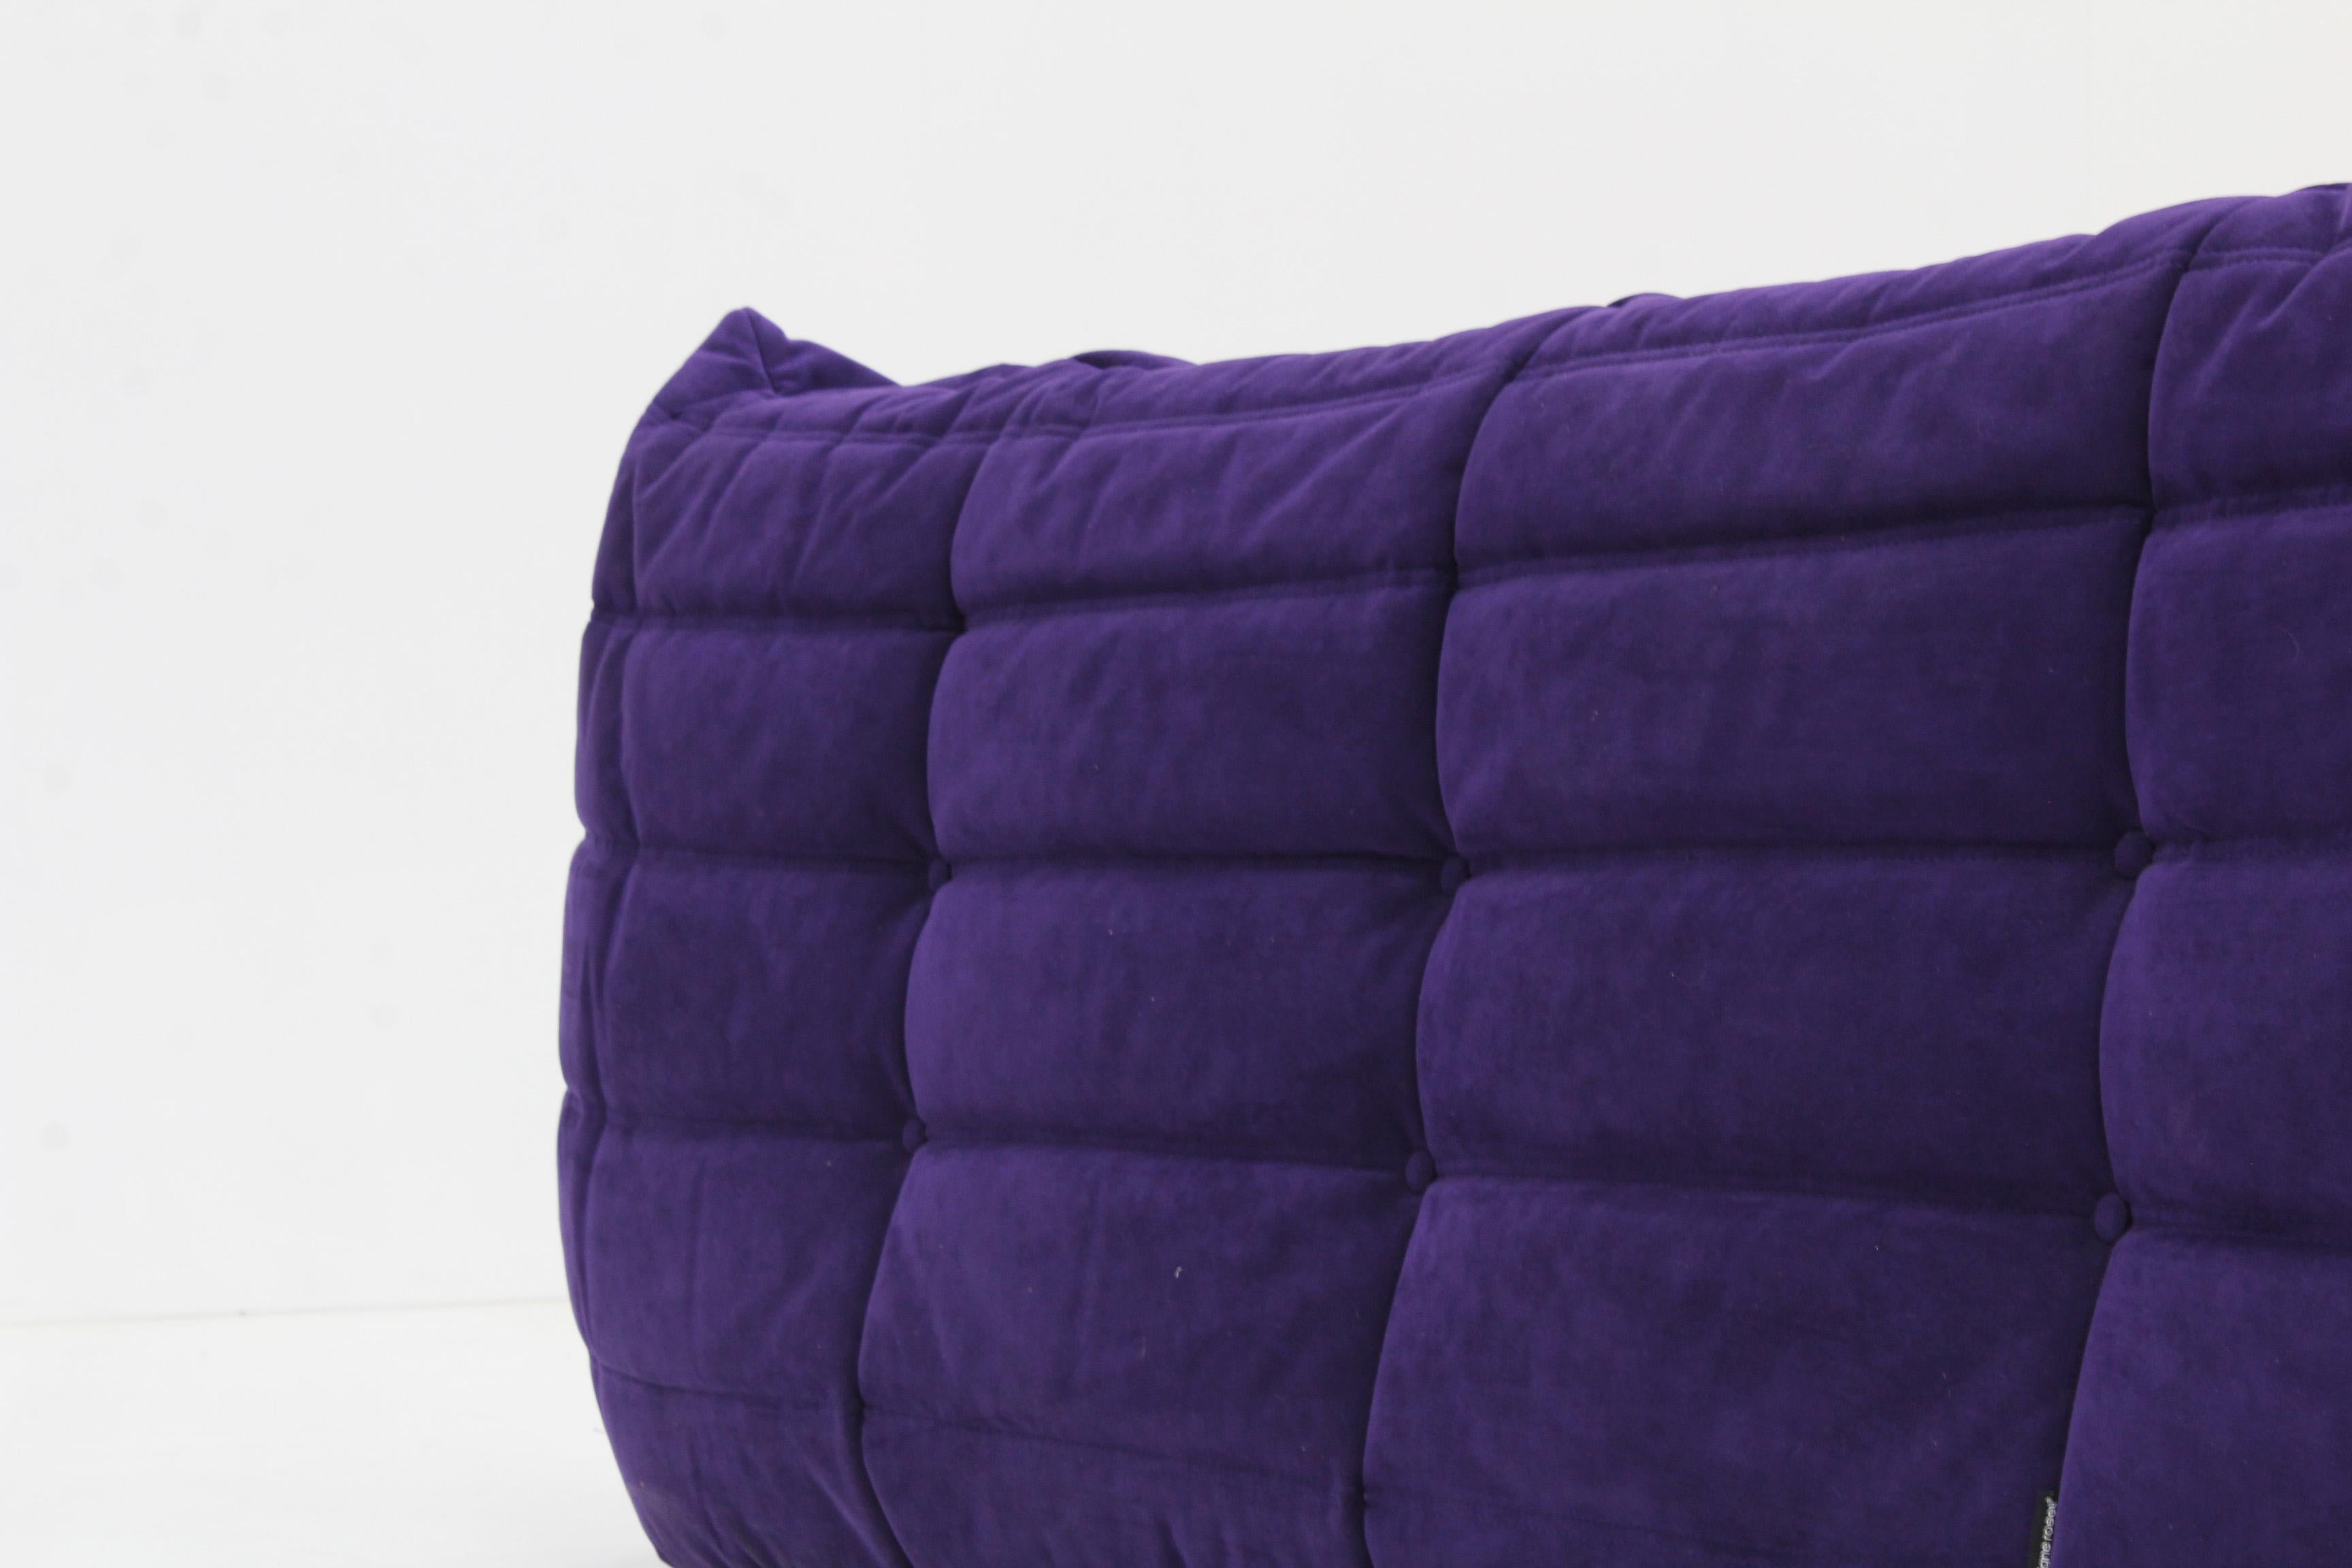 French Original Vintage Togo ligne Roset 3 seater sofa purple alacantra 